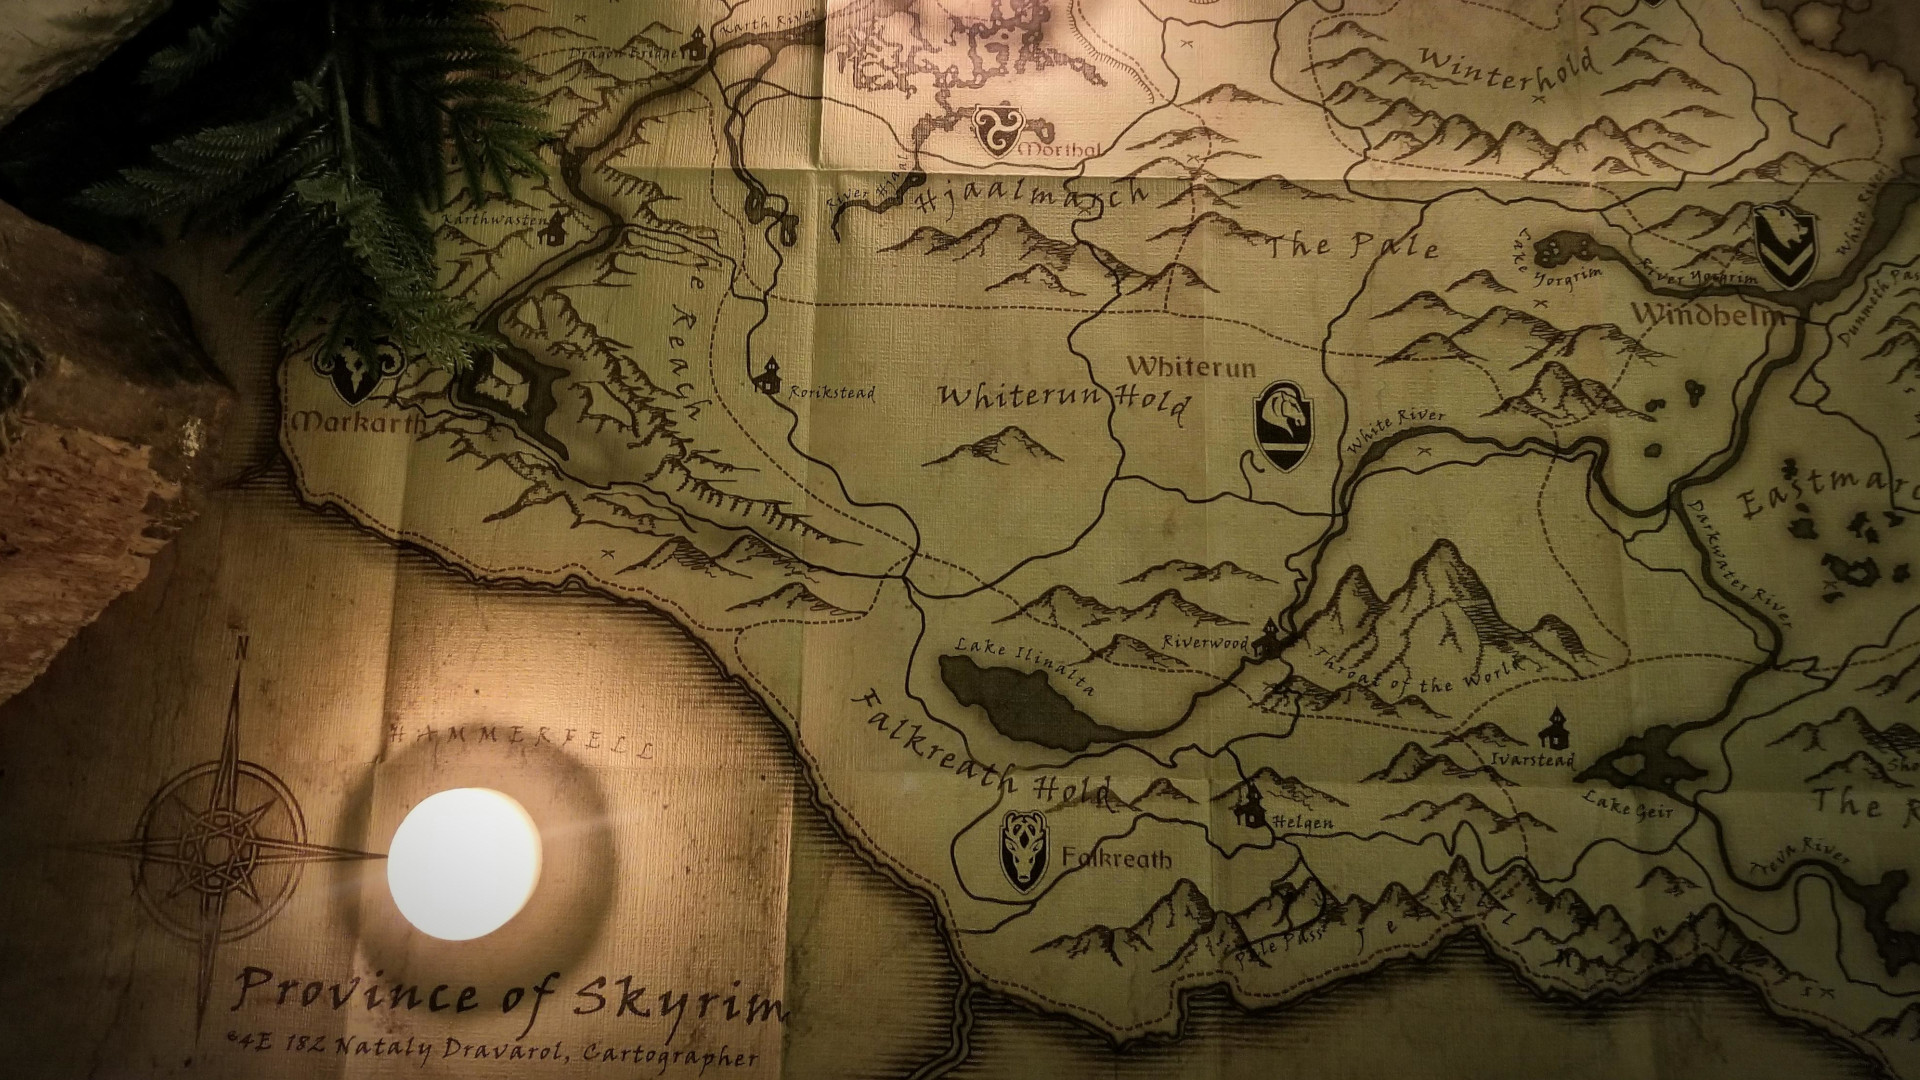 The Elder Scrolls 6 reveal teased by former Bethesda dev